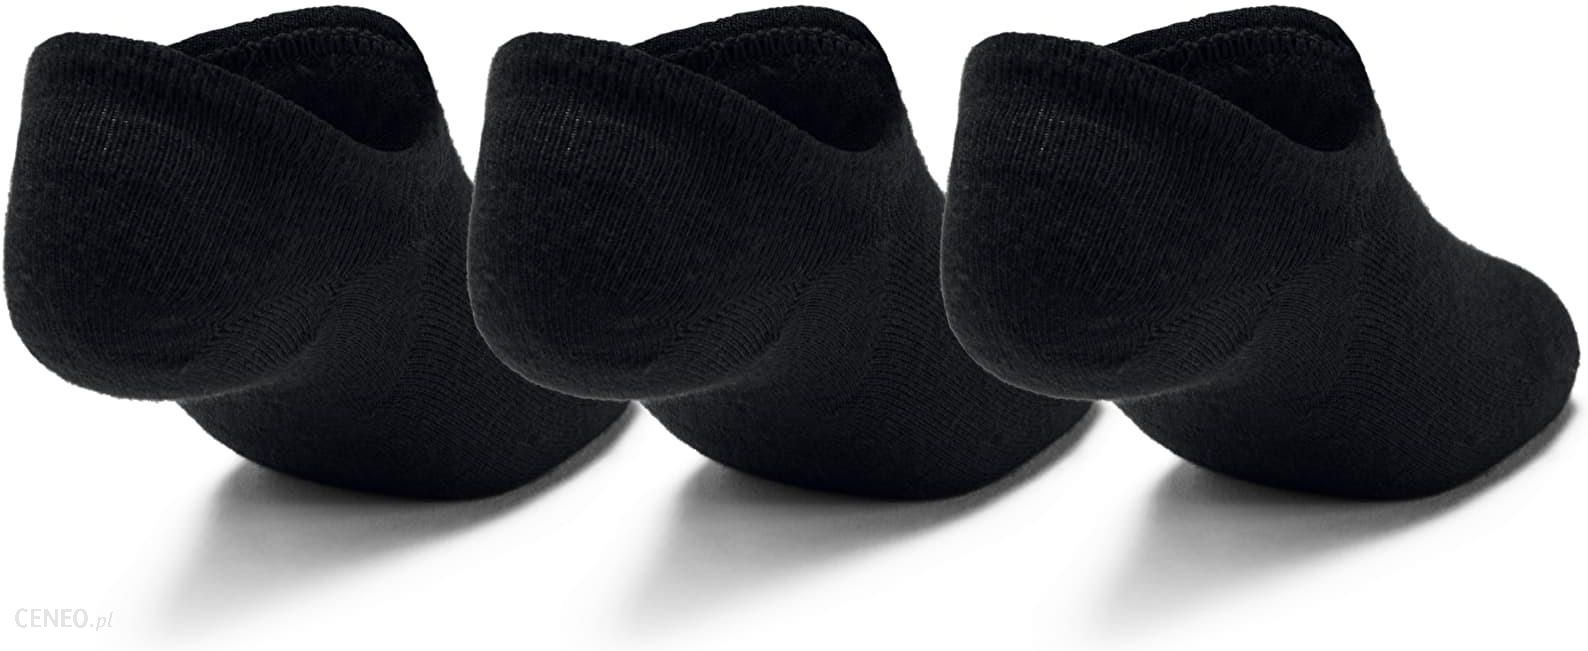 Under Armour Ultra Low 3-Pack Socks Black - Ceny i opinie - Ceneo.pl